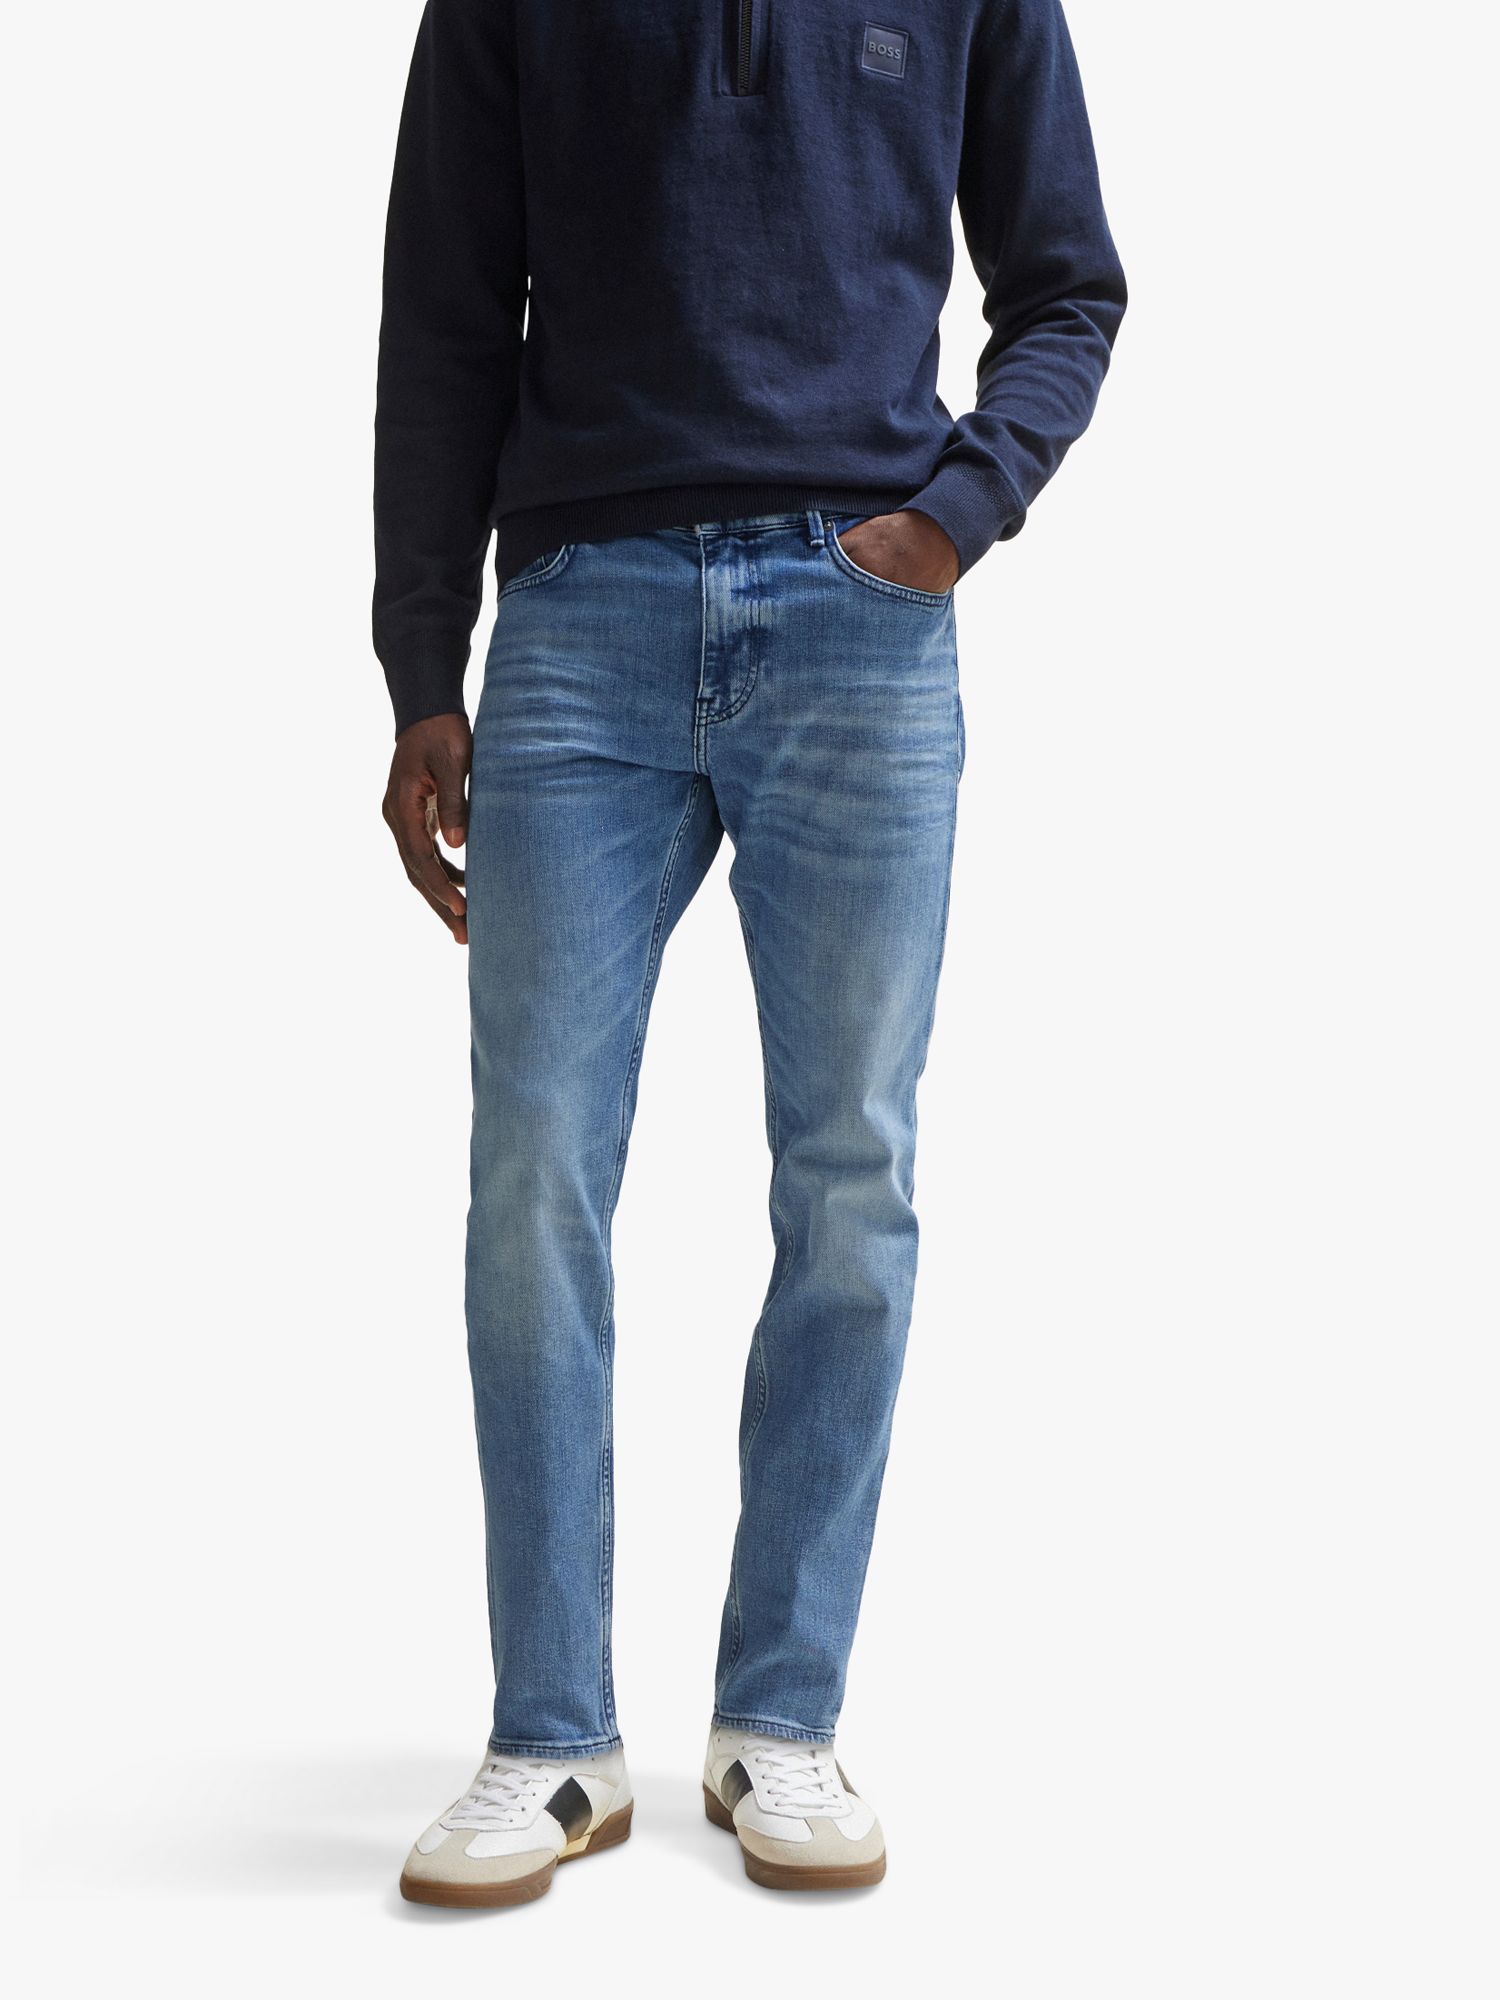 BOSS Delano Slim Fit Jeans, Blue at John Lewis & Partners